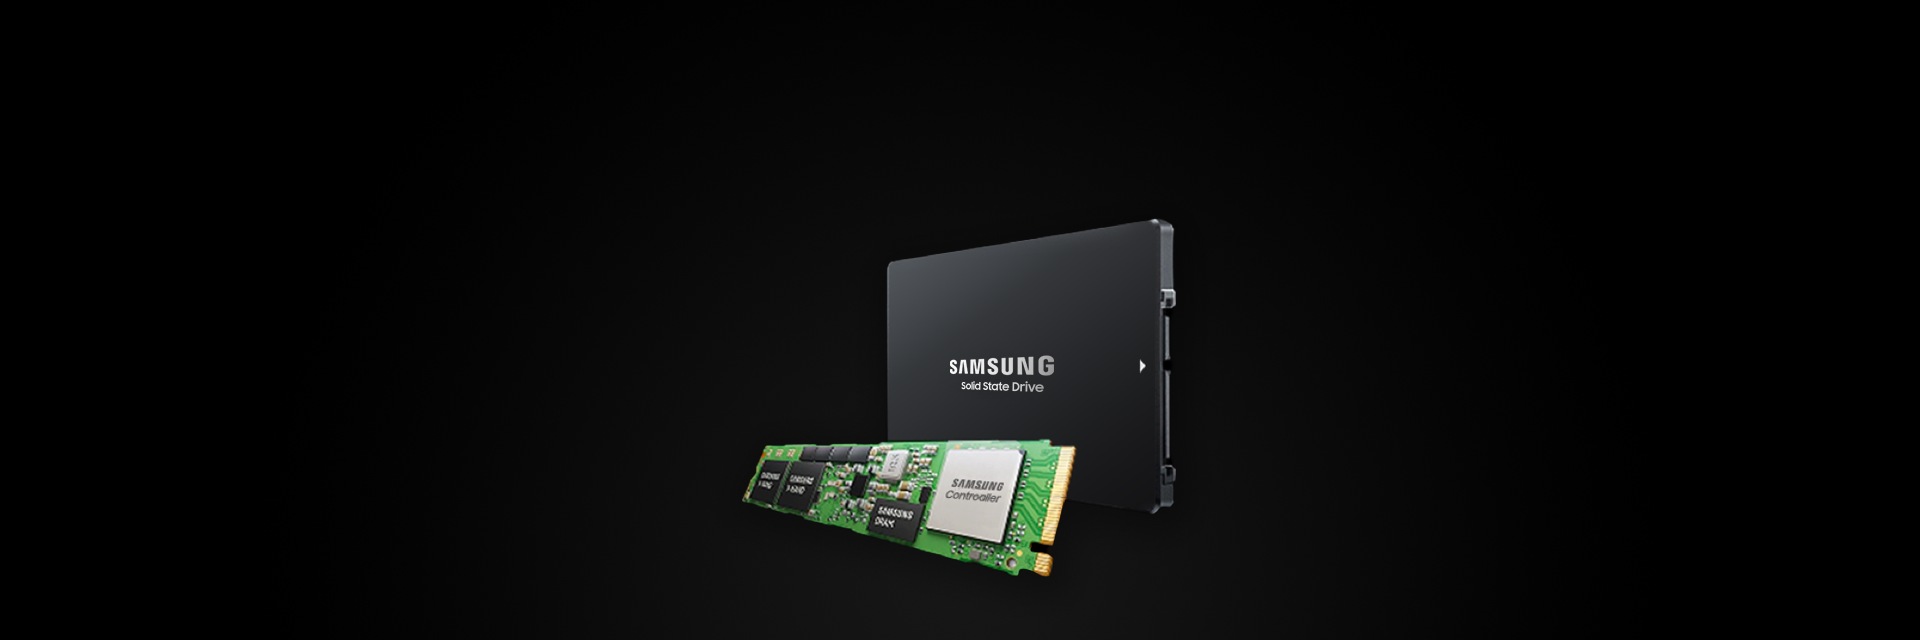 Samsung Semiconductor Datacenter SSD, Innovating Enterprise Storage